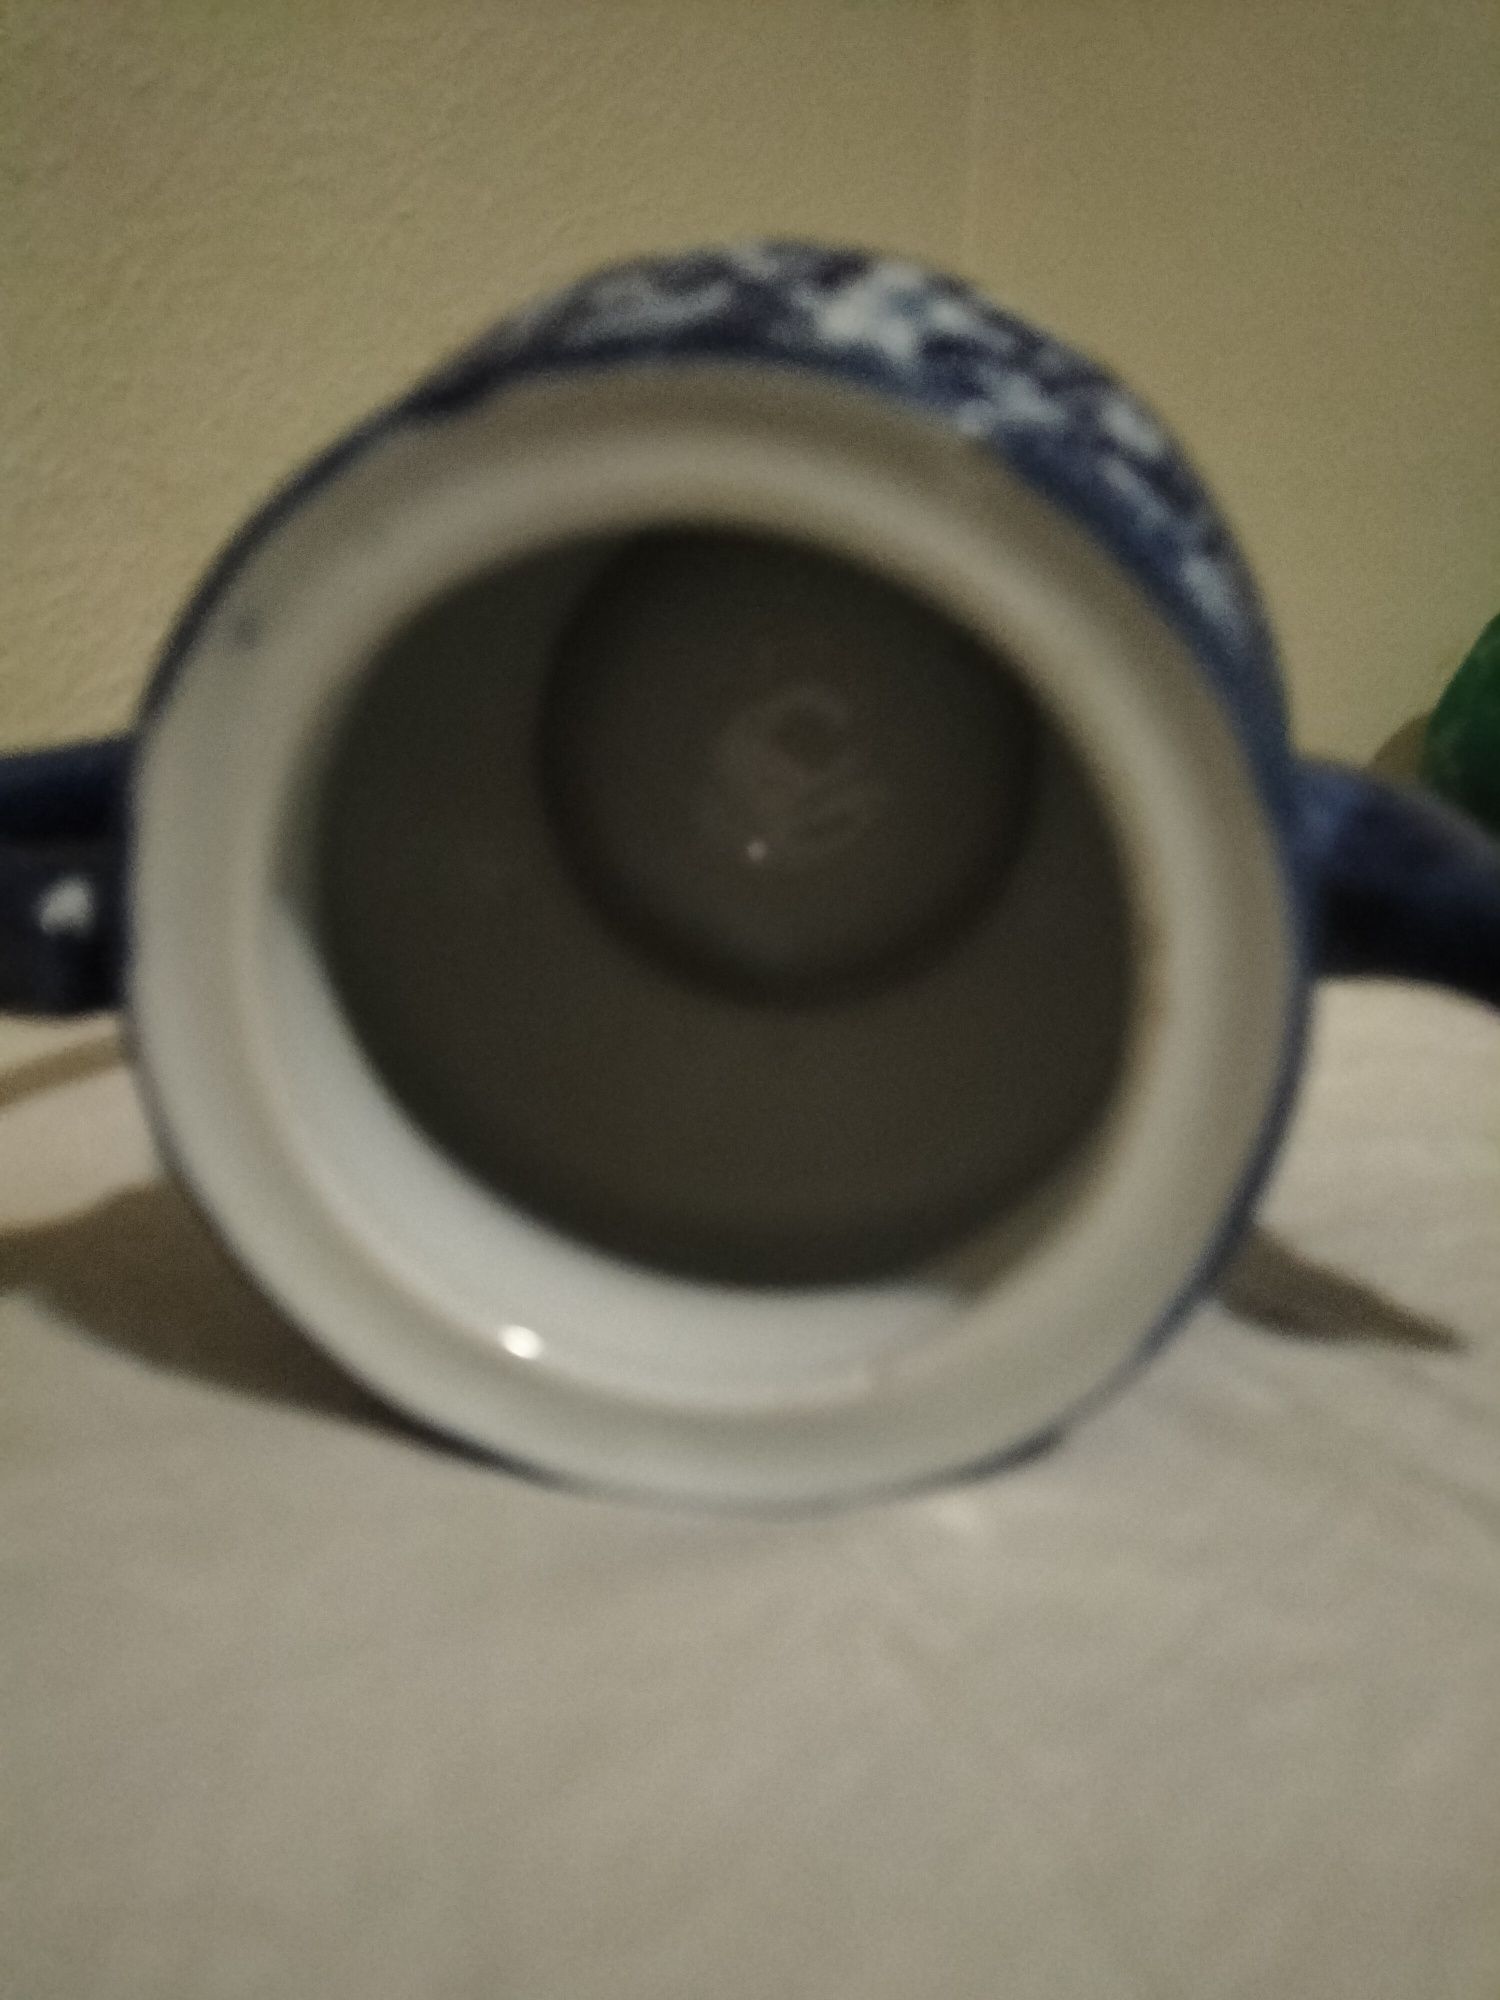 Bule de chá antigo